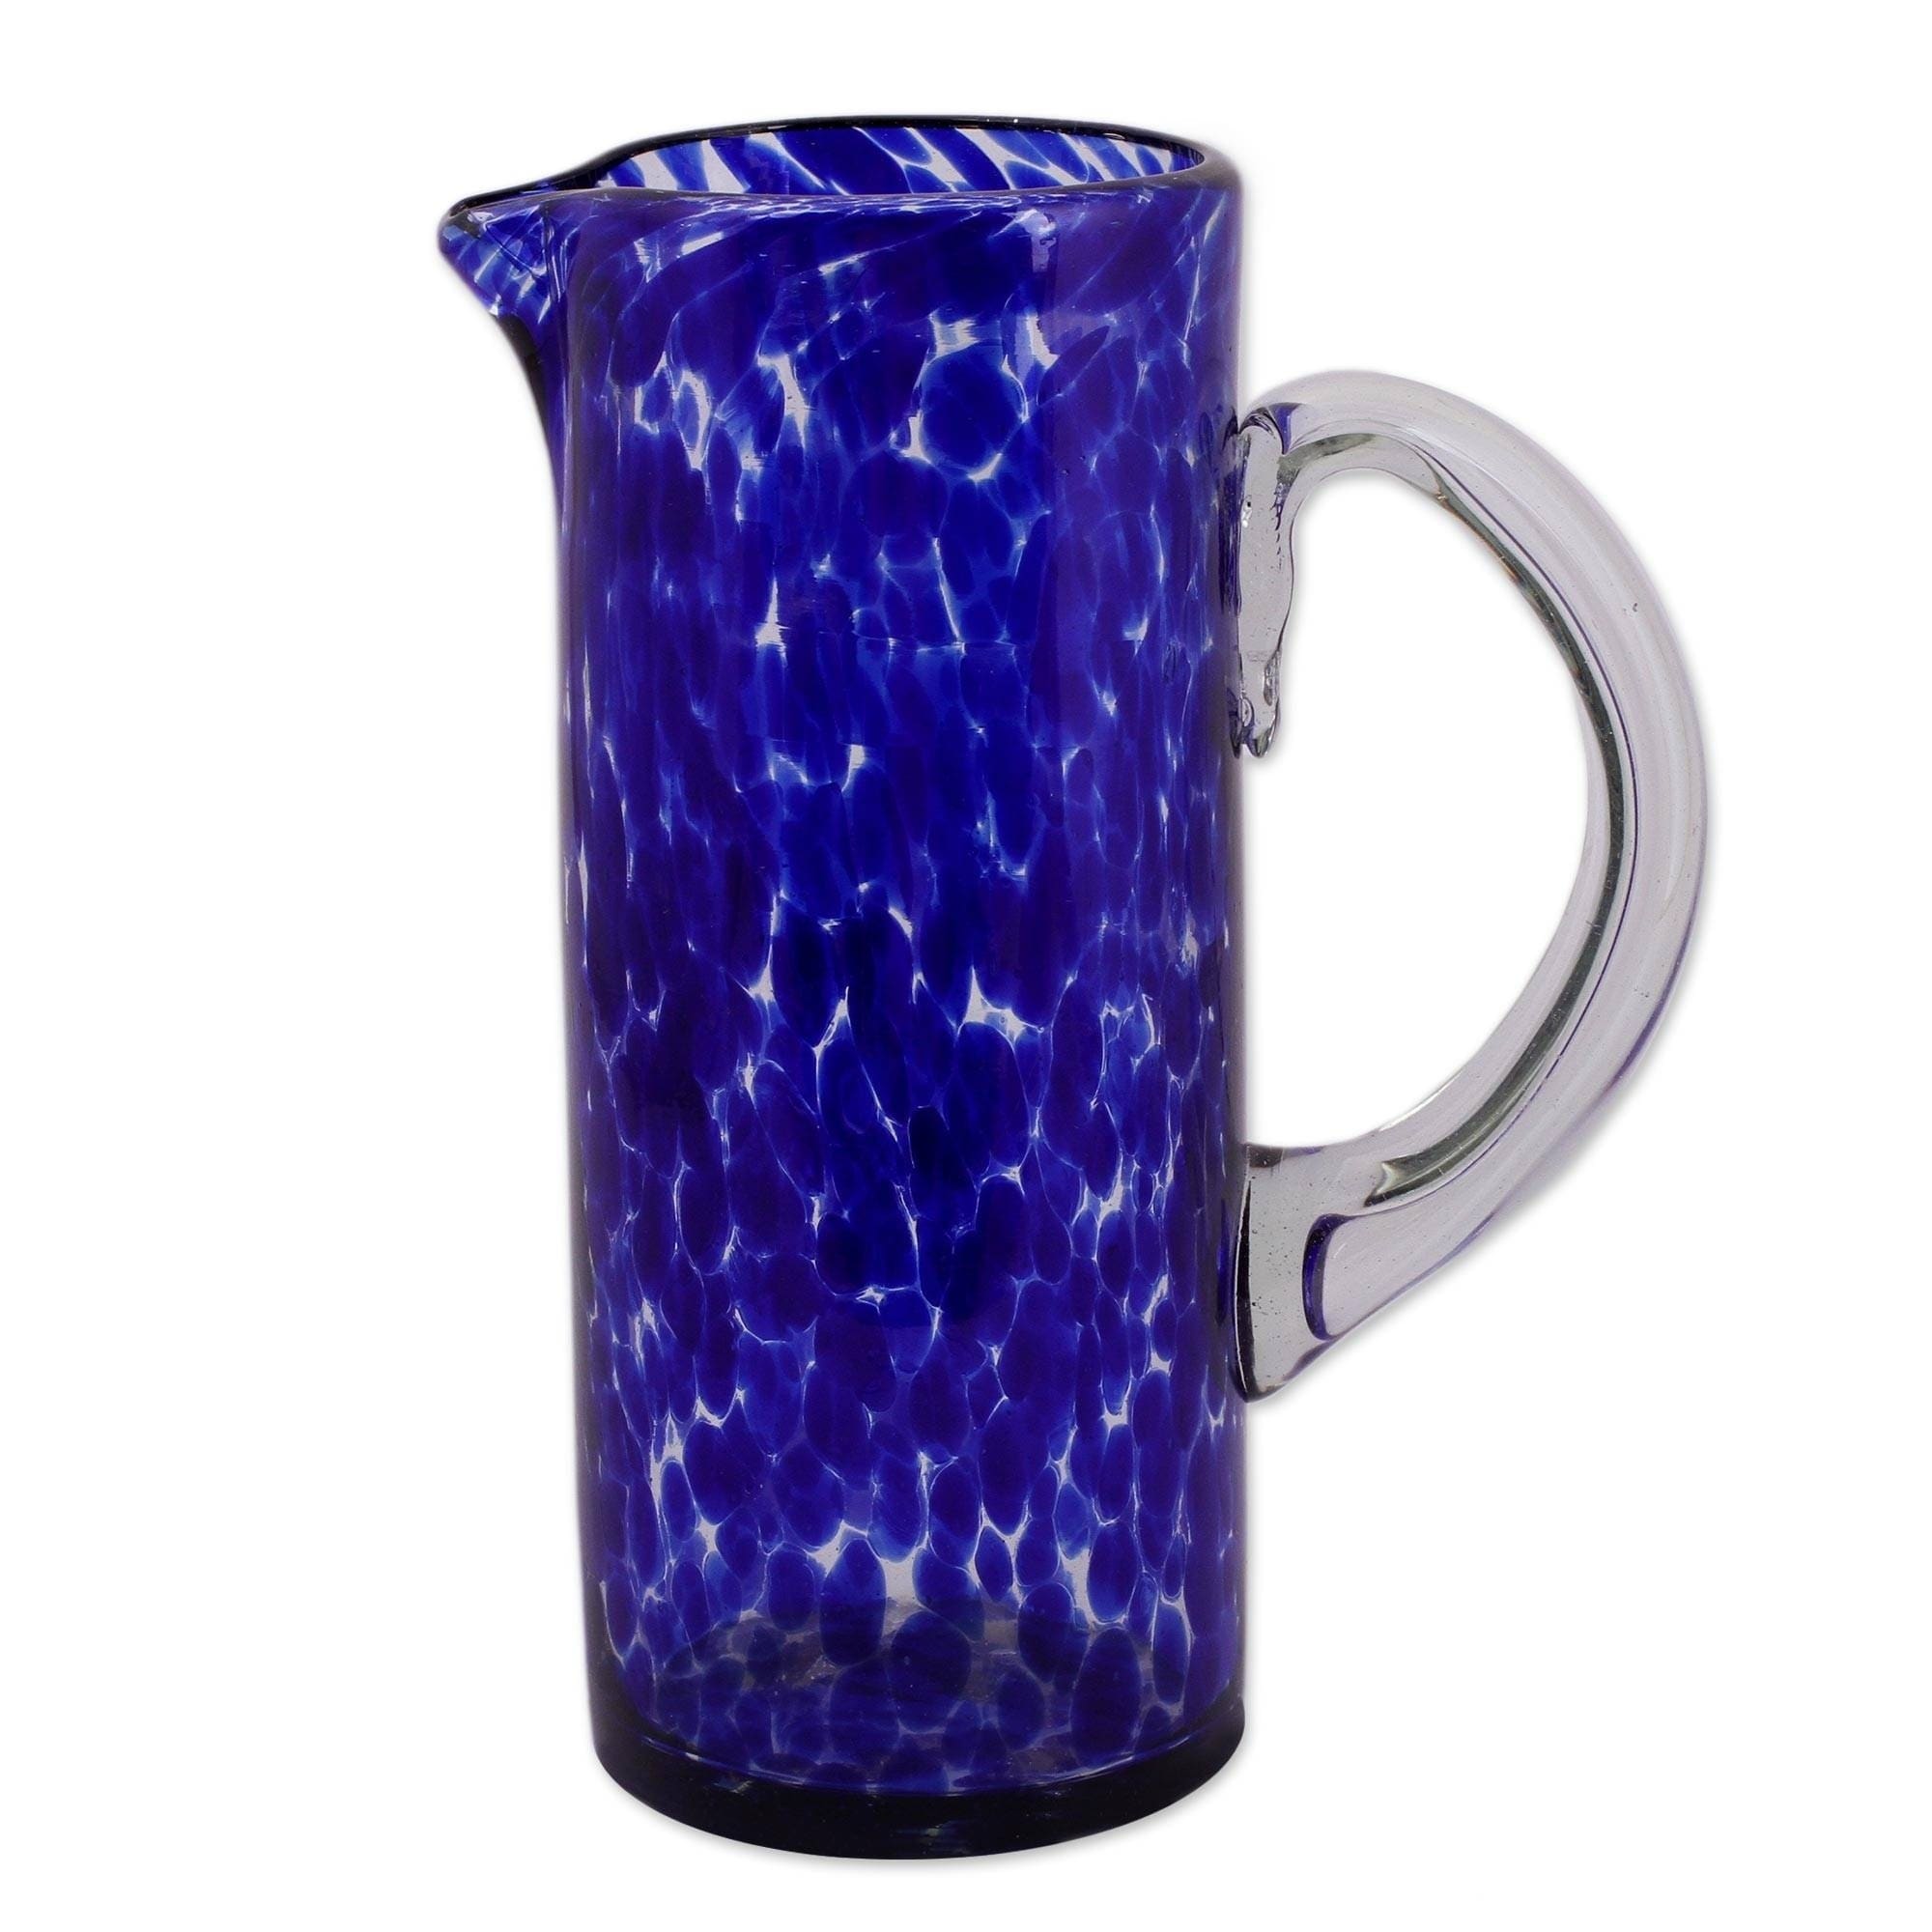 https://ak1.ostkcdn.com/images/products/3374436/Handmade-Glass-Dotted-Blue-Pitcher-Mexico-34cd3bdf-75cc-40e7-8966-ea488ebebfcb.jpg